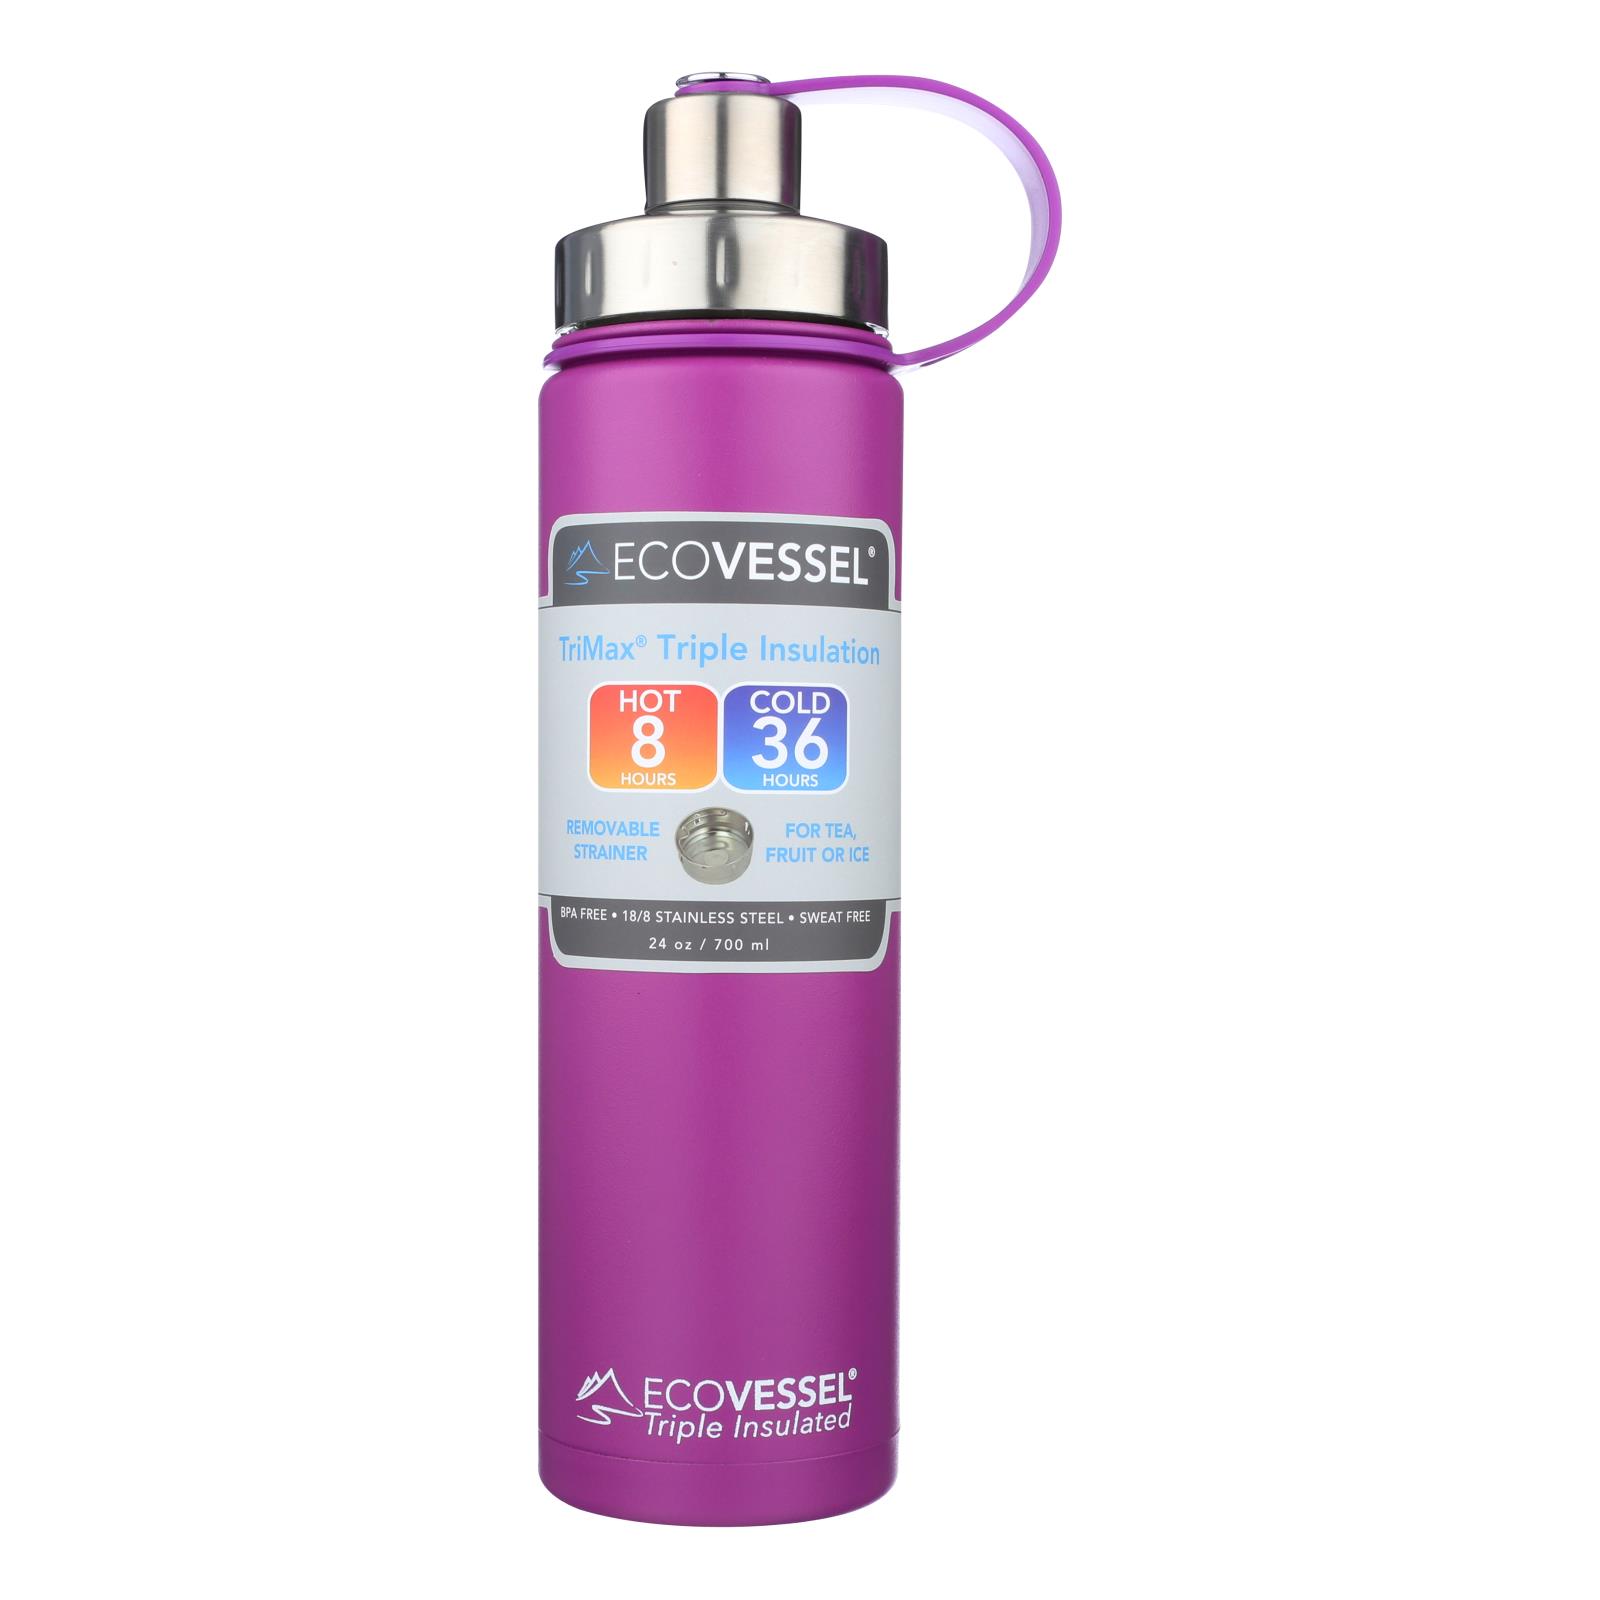 Ecovessel Trimax Triple Insulation Stainless Steel Water Bottle In Purple Haze - Case of 6 - 24 OZ